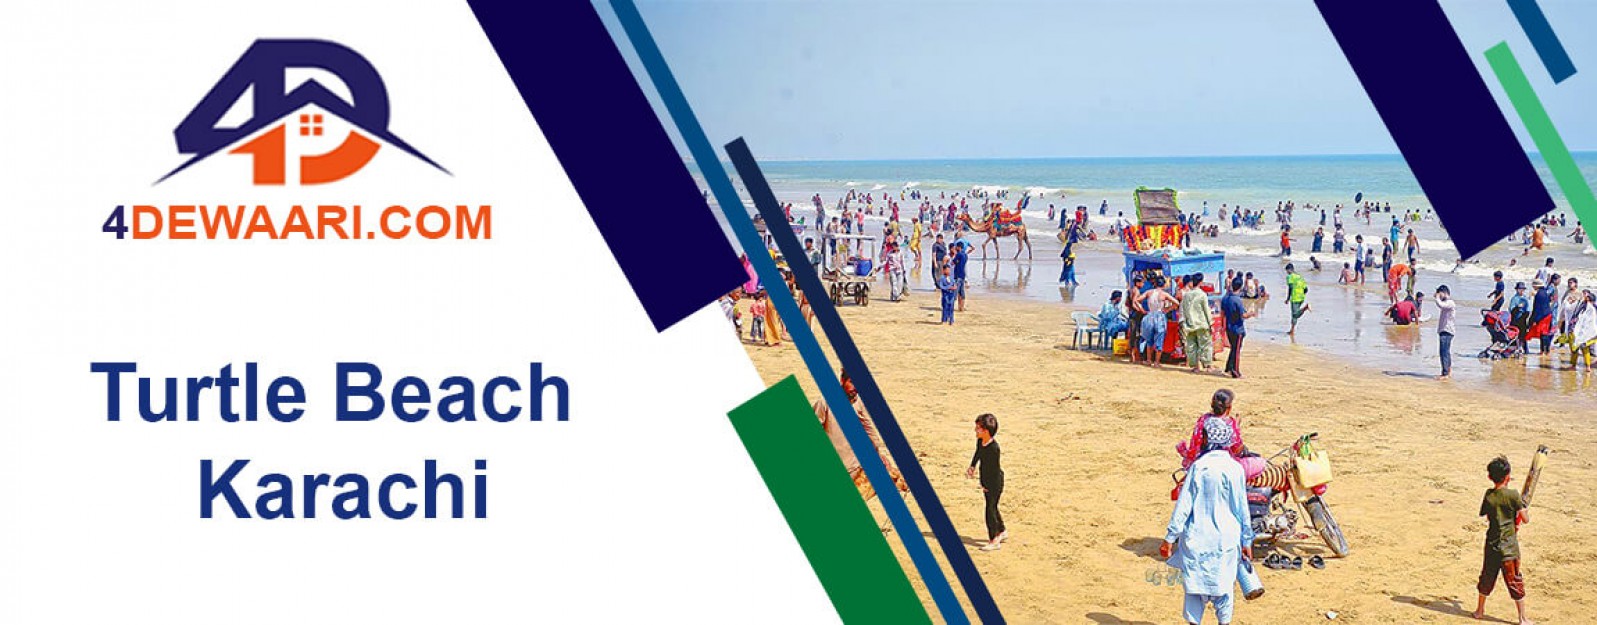 Tourist Guide to Turtle Beach Karachi